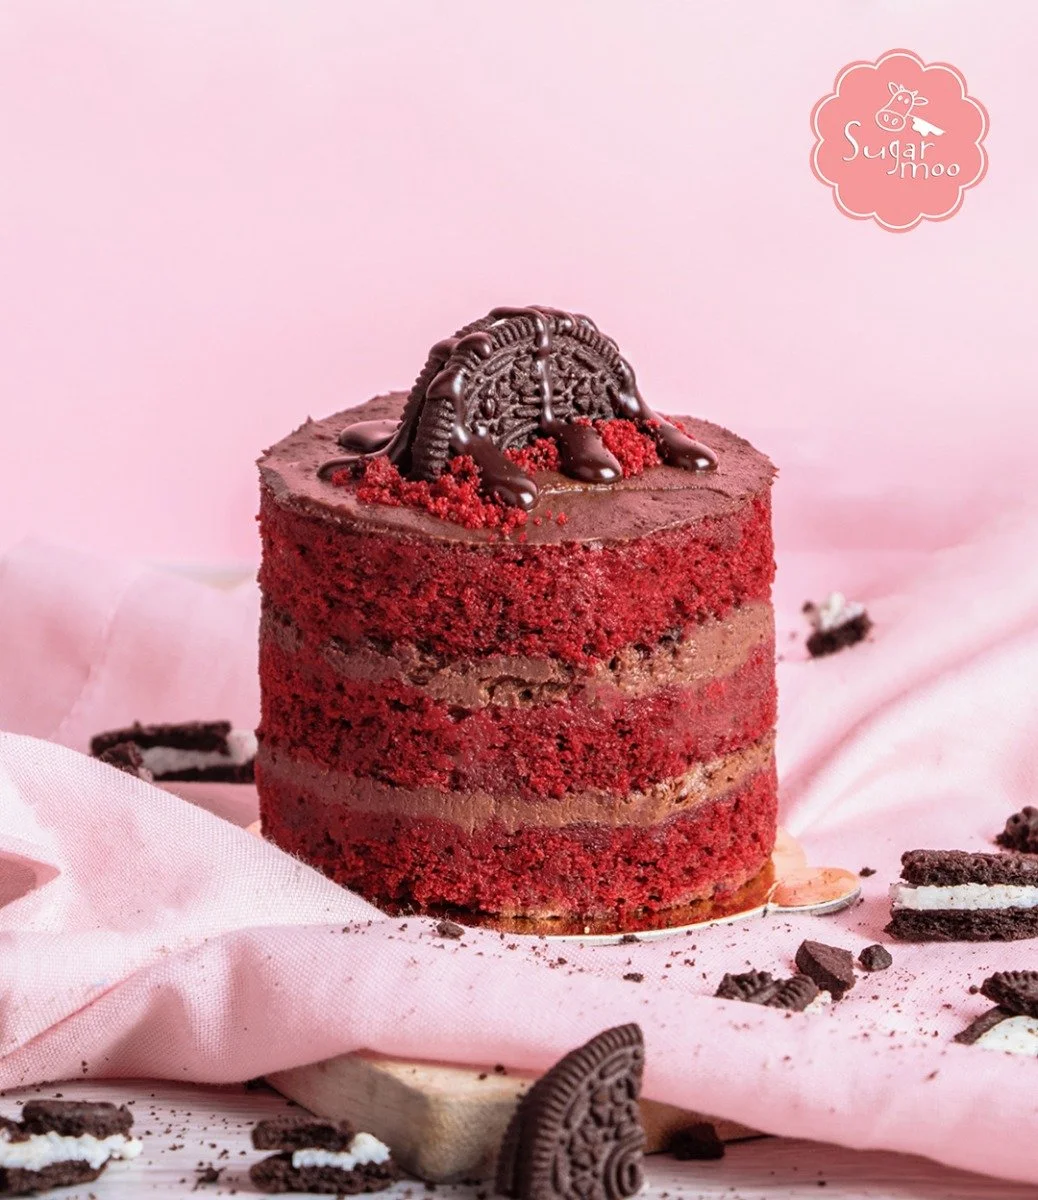 Baby Red Velvet Oreo Crunch Cake by Sugarmoo